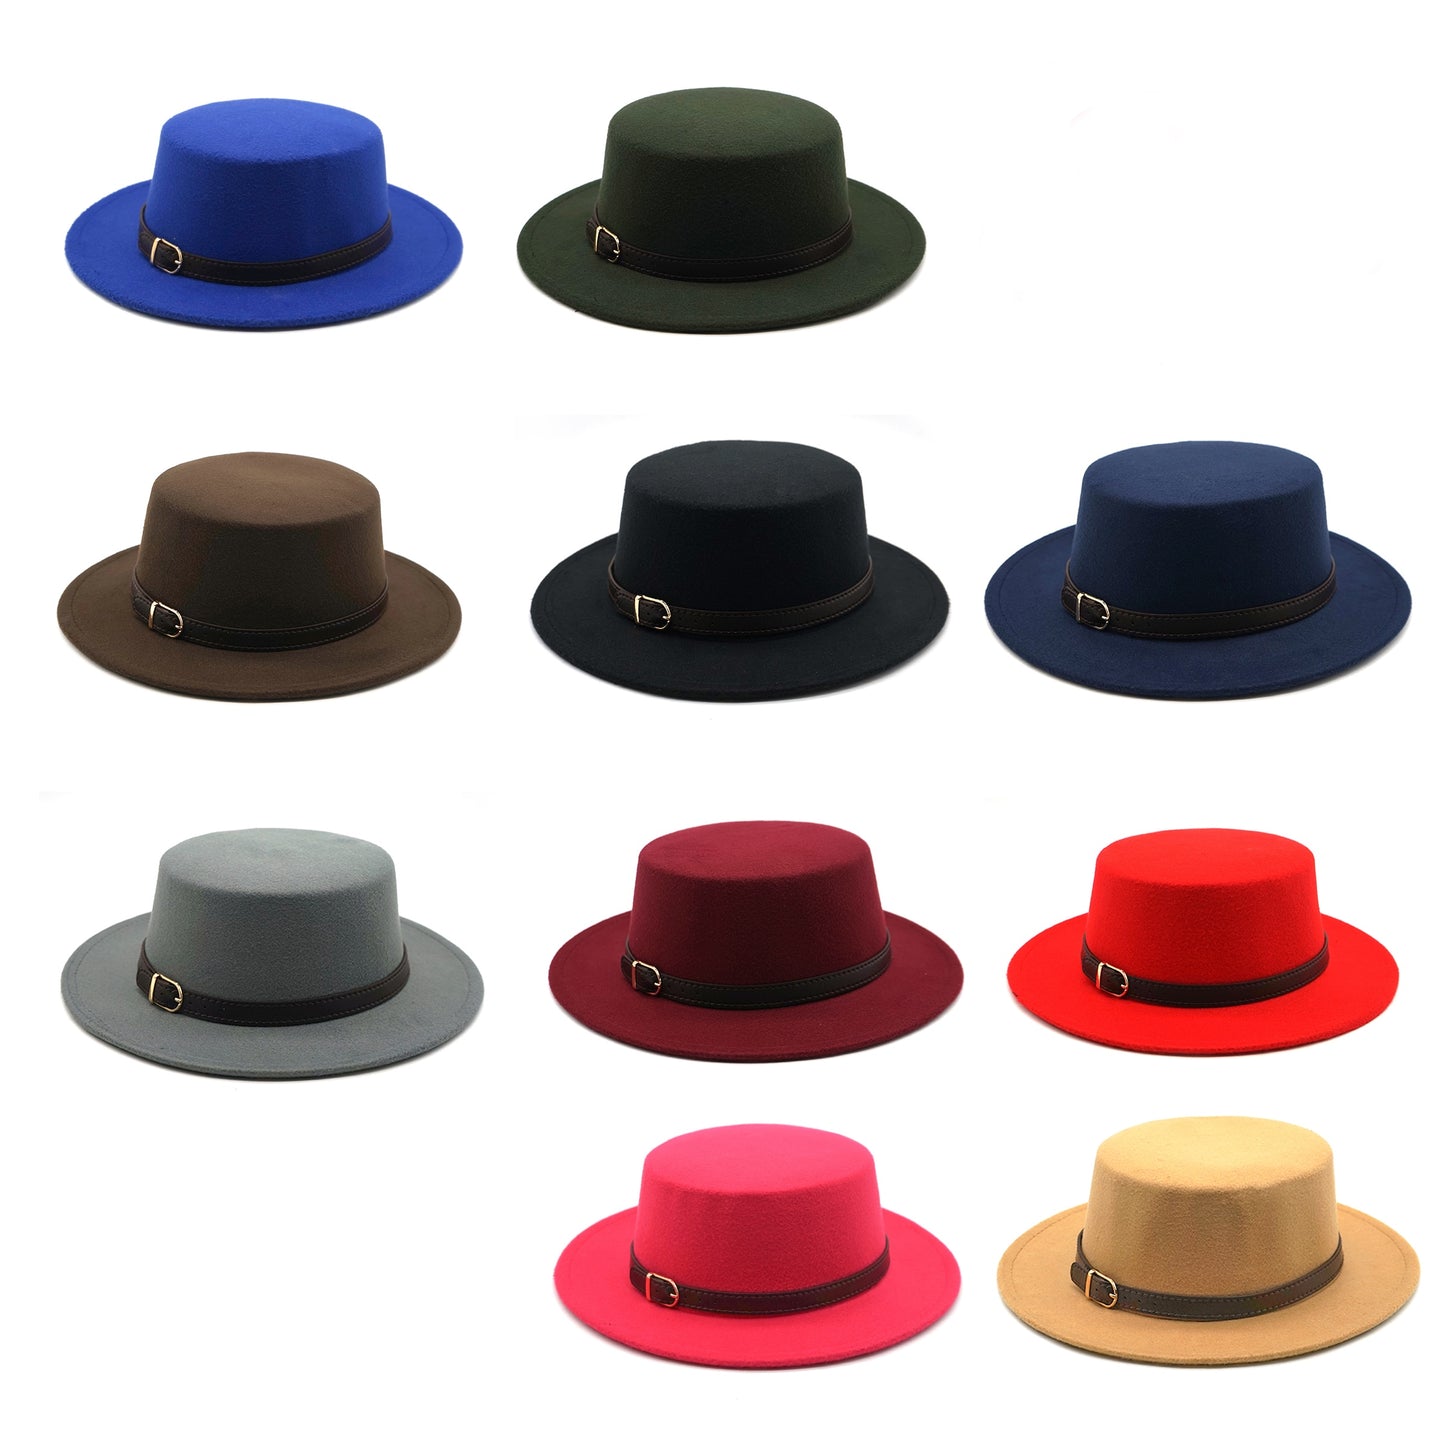 New Retro Winter Autumn women men Top hat Imitation Woolen Felt Fedora Hats Belt buckle Decorated ladies Boater Hat flat brim